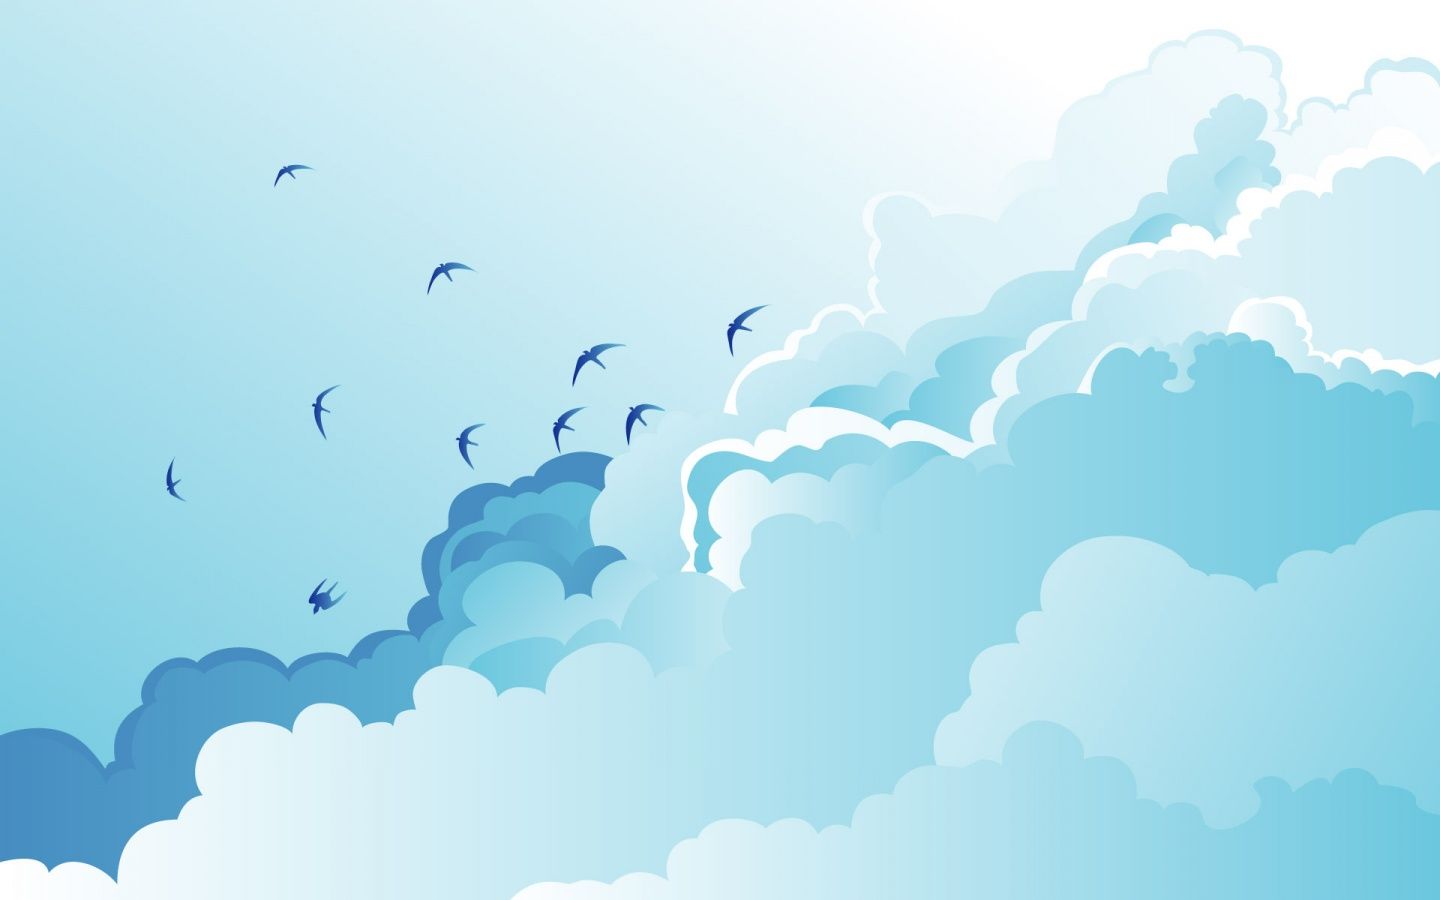 Free download 1440x900 Cloud Birds desktop PC and Mac wallpaper [1440x900] for your Desktop, Mobile & Tablet. Explore Cloud Wallpaper for Computers. Clouds Background Wallpaper, Wallpaper of Clouds, Free Cloud Wallpaper